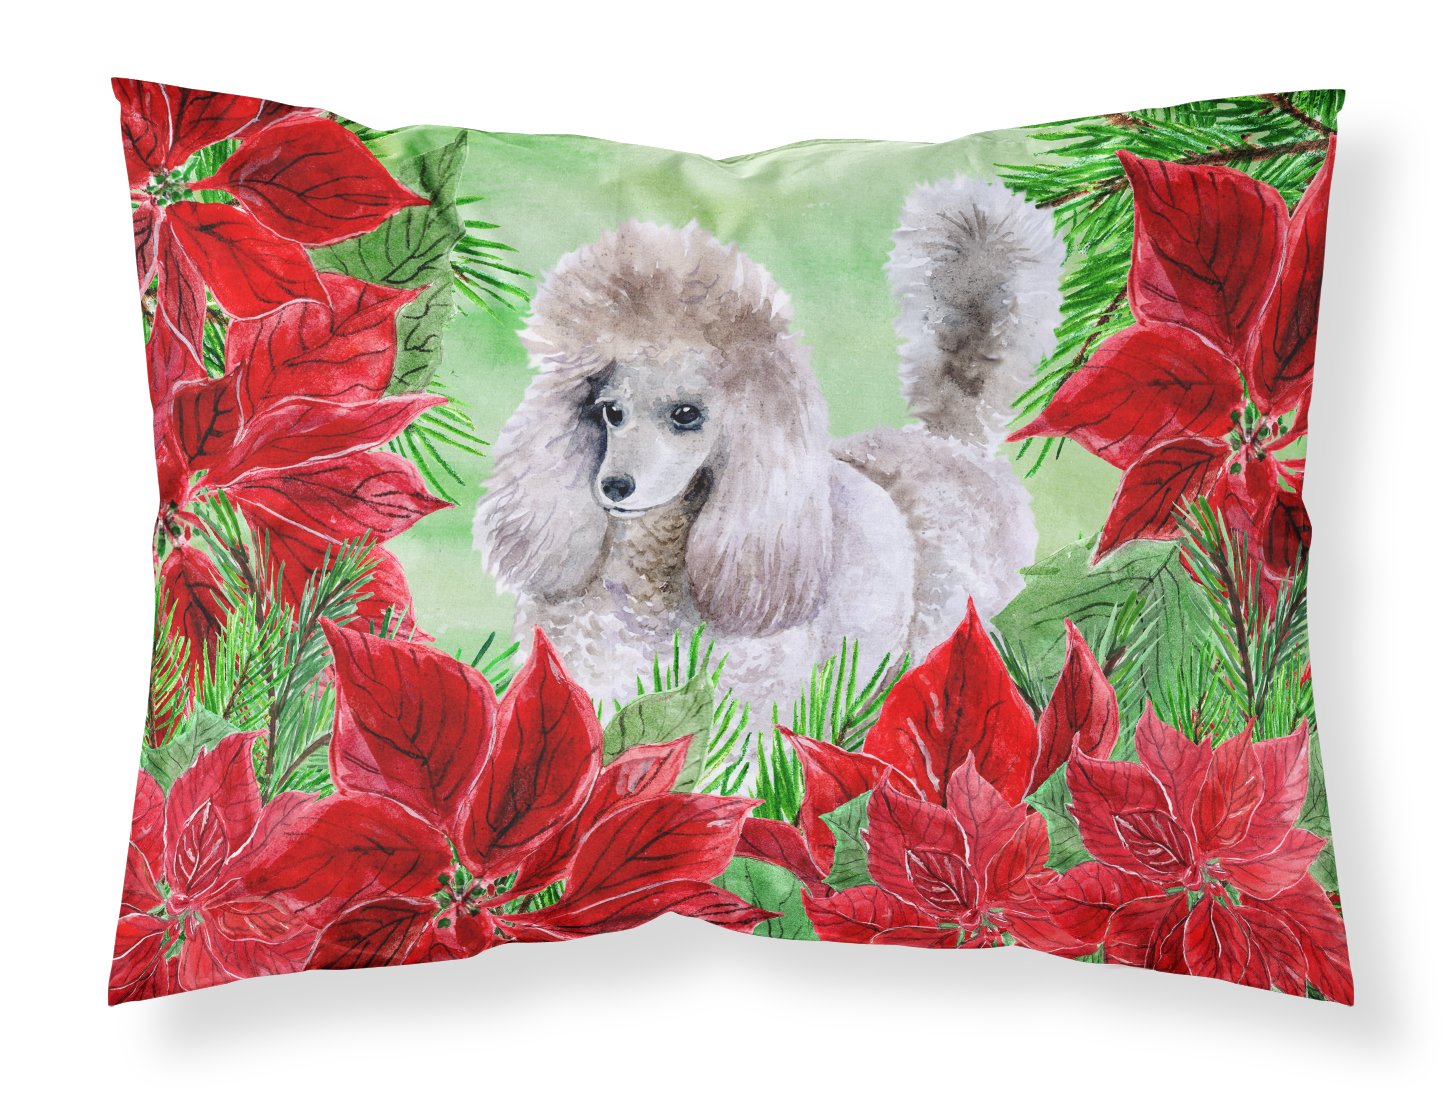 Poodle Poinsettas Fabric Standard Pillowcase CK1313PILLOWCASE by Caroline's Treasures